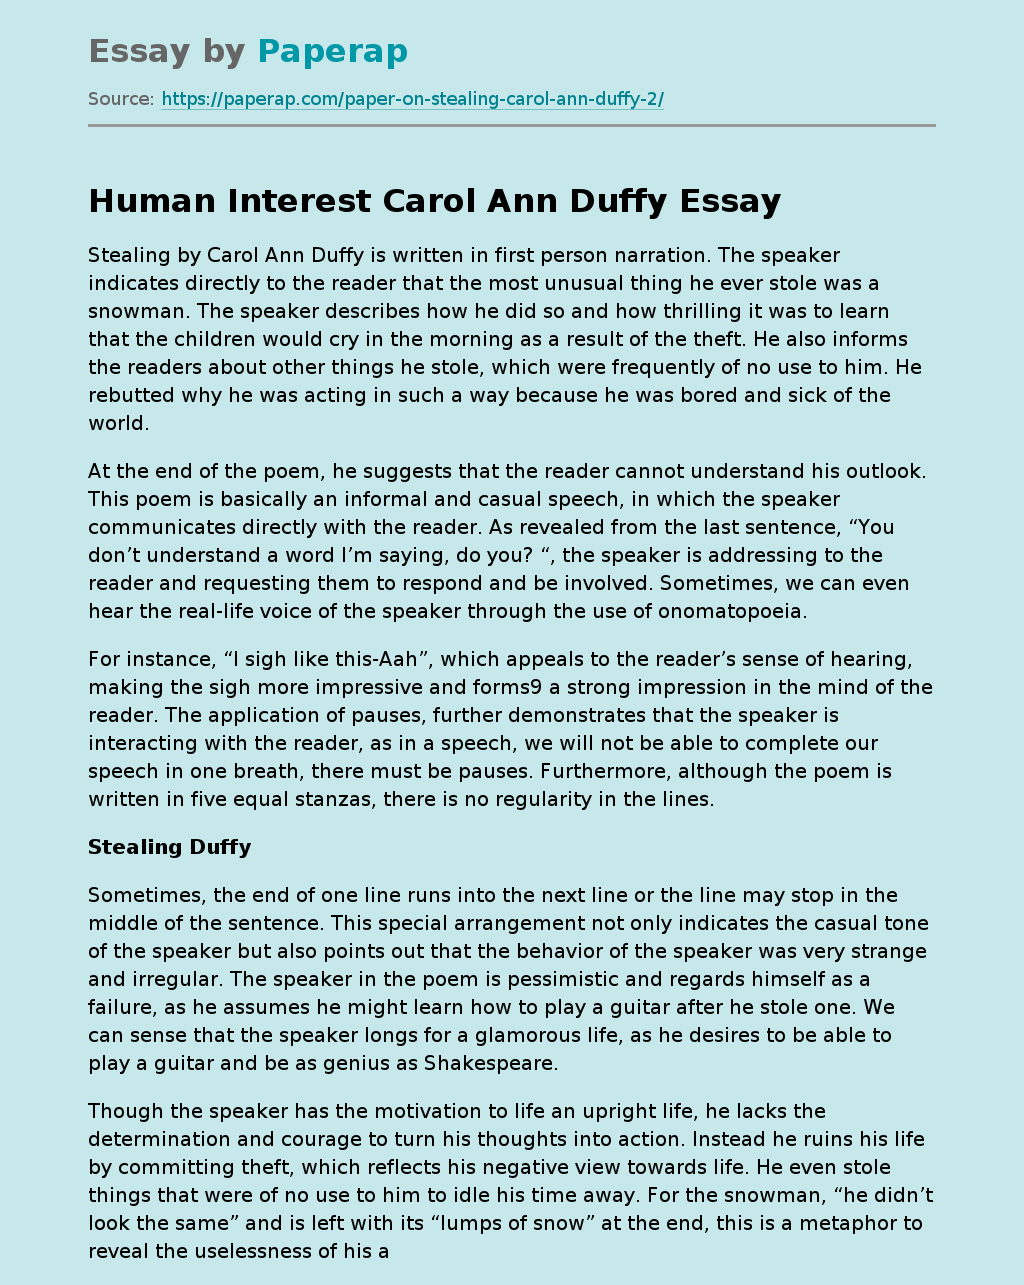 Human Interest Carol Ann Duffy